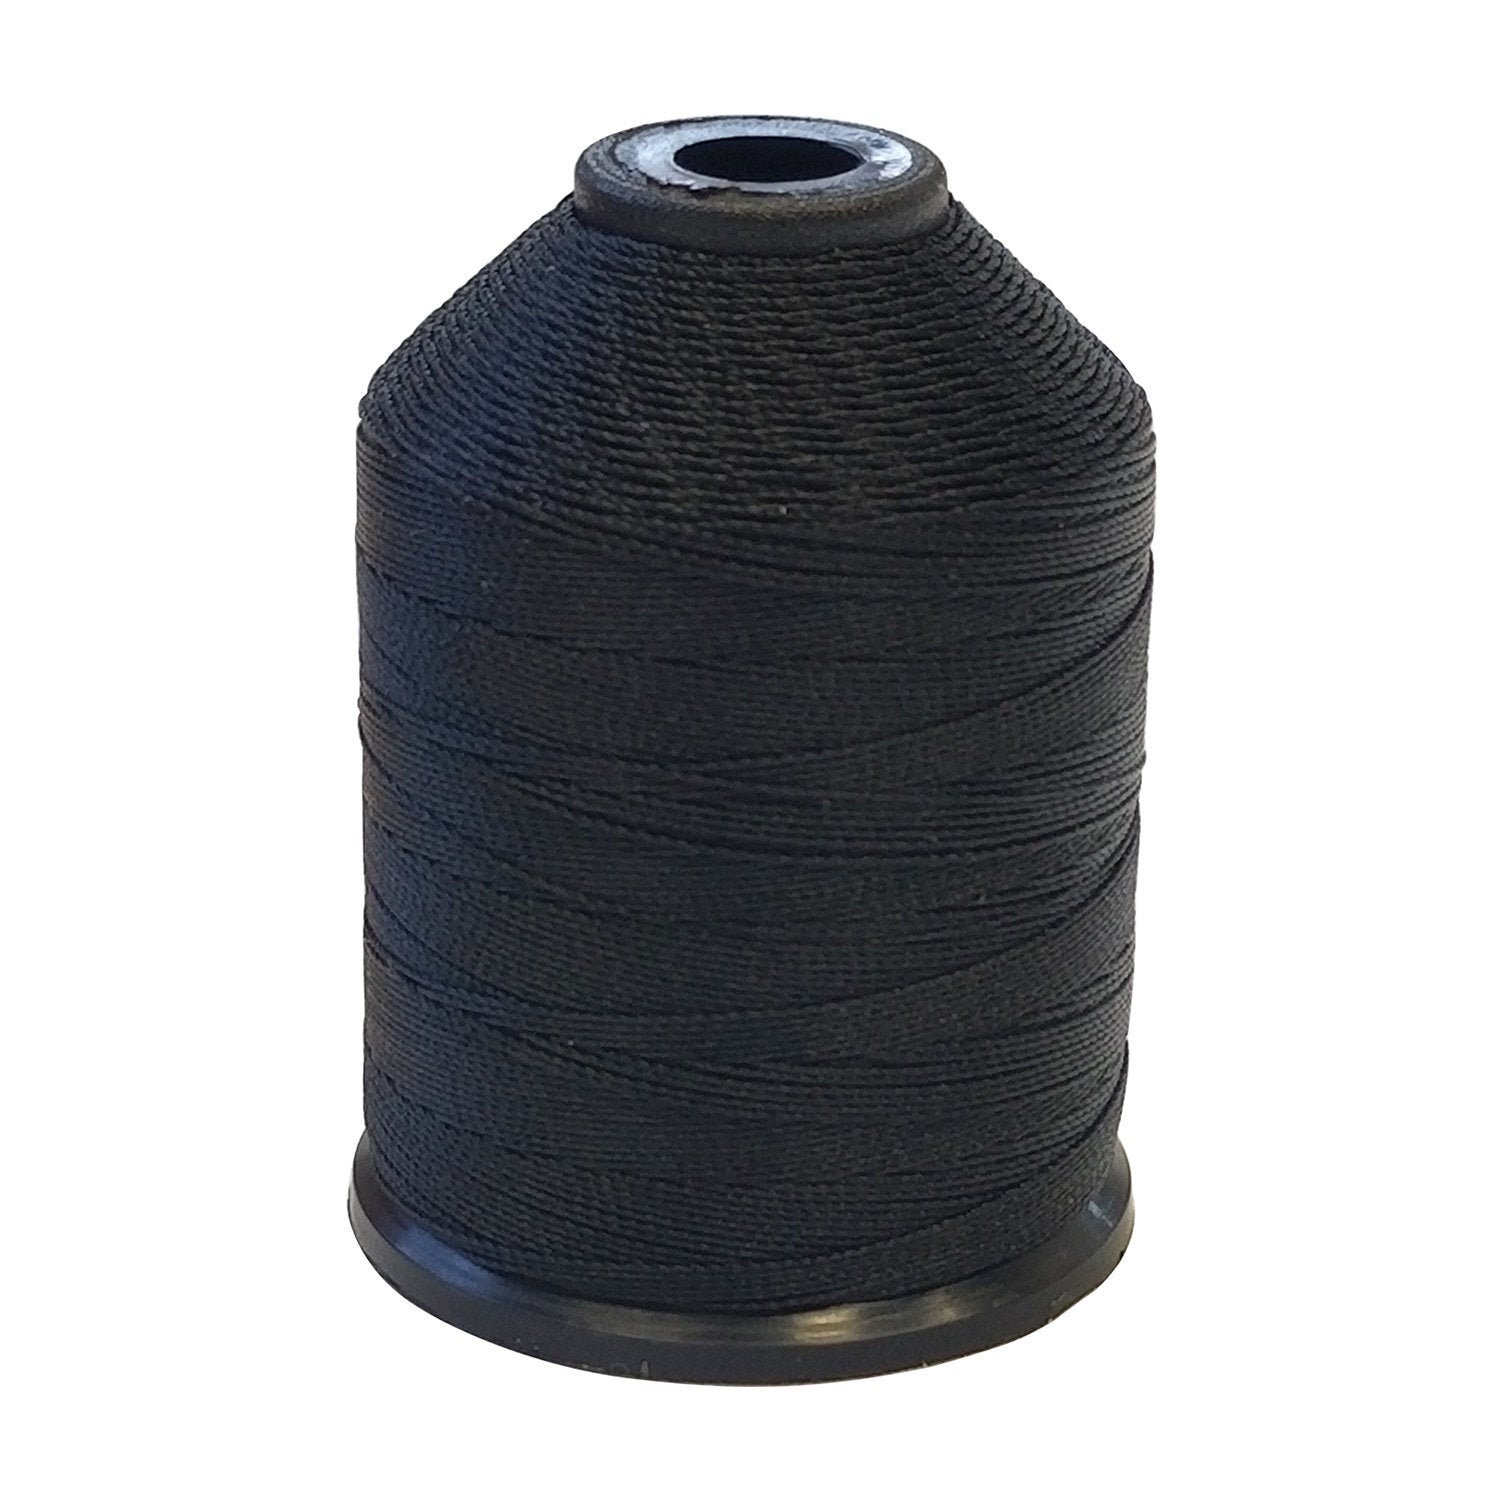 Bonded Nylon Thread - Size 138 - TEX-135 - Colors Black and White